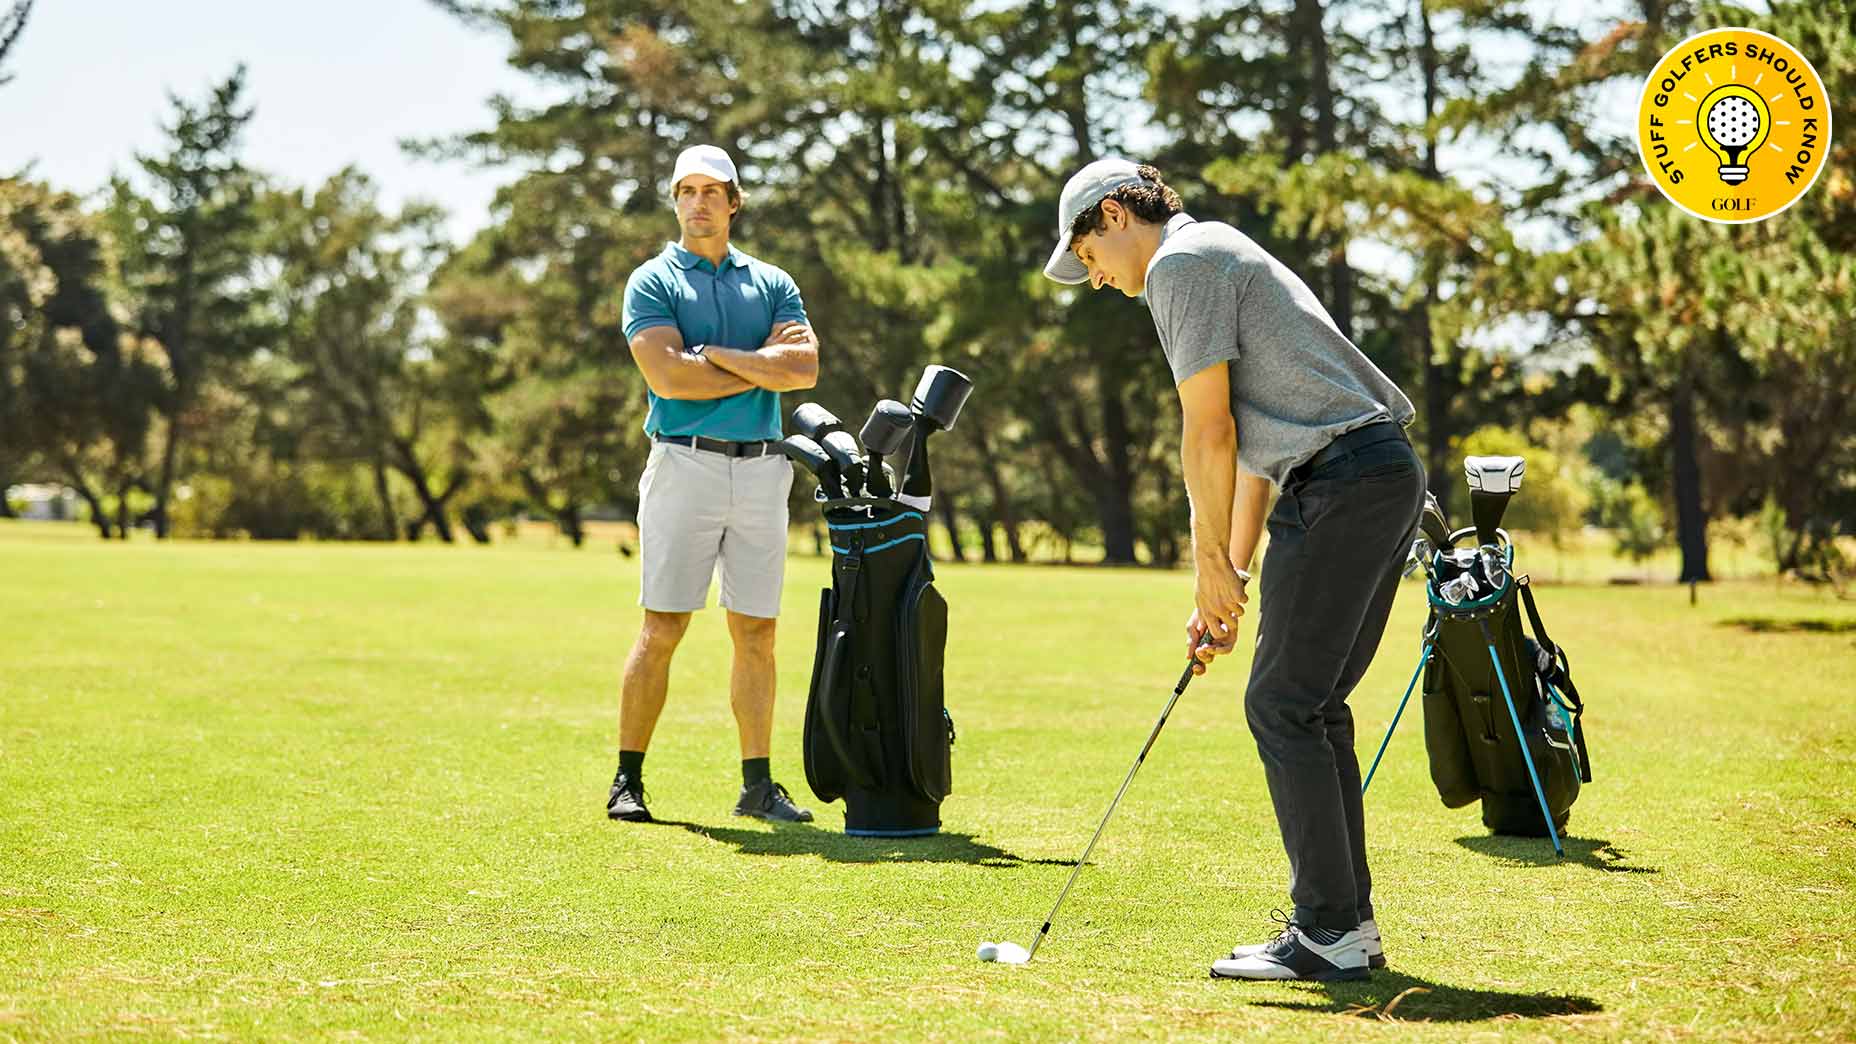  Golf News, Golf Equipment, Instruction, Courses, Travel